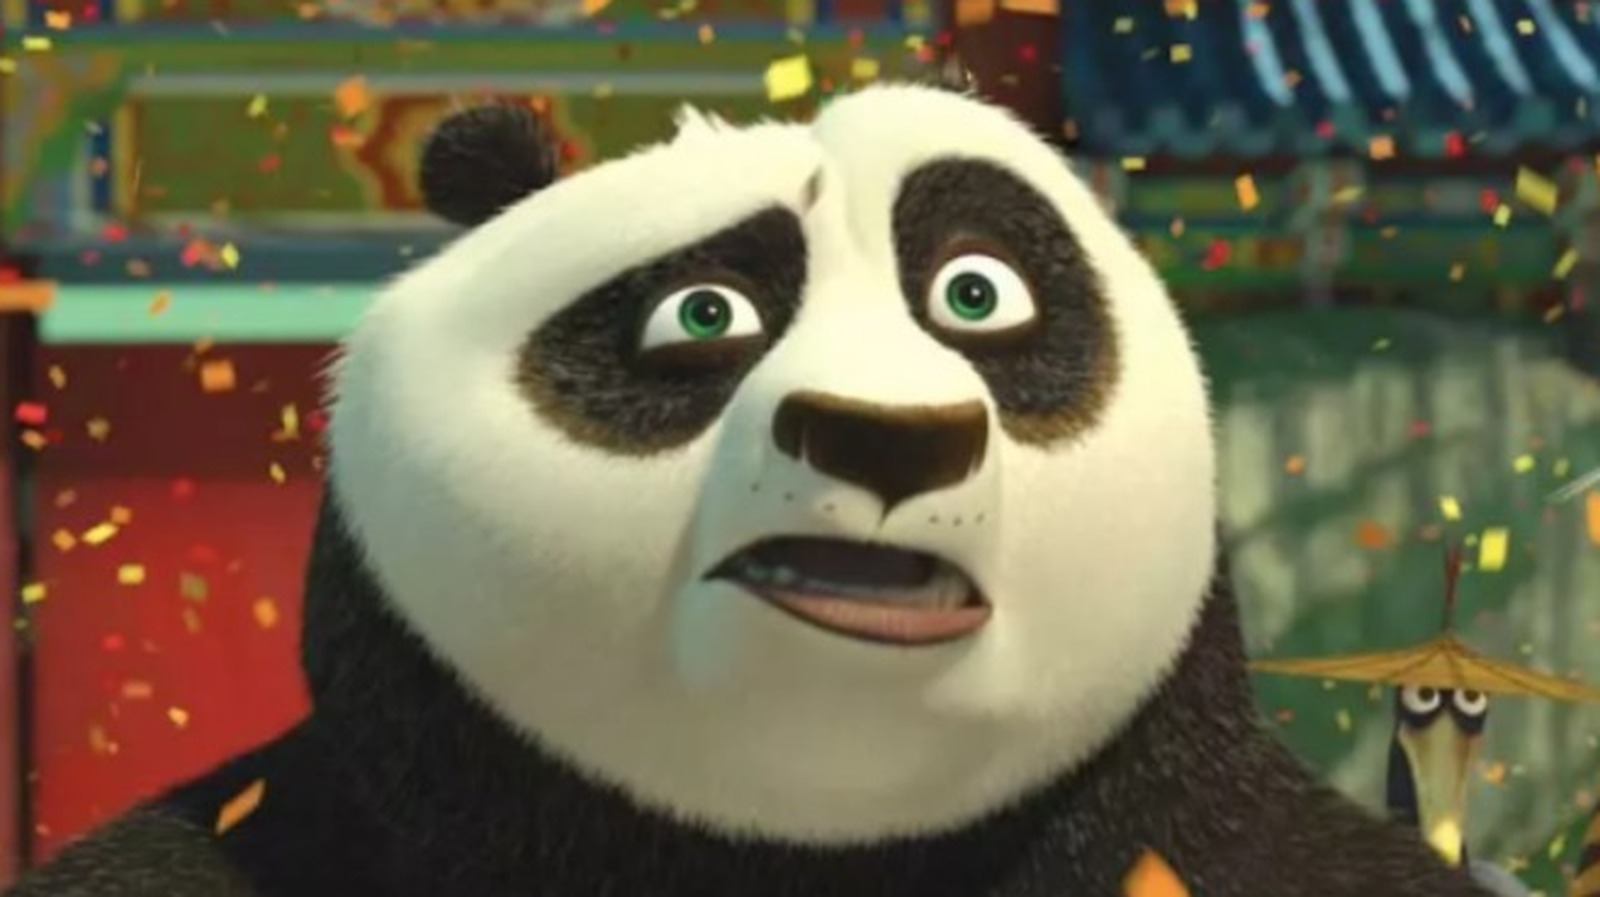 When Will Kung Fu Panda 3 Hit Netflix?